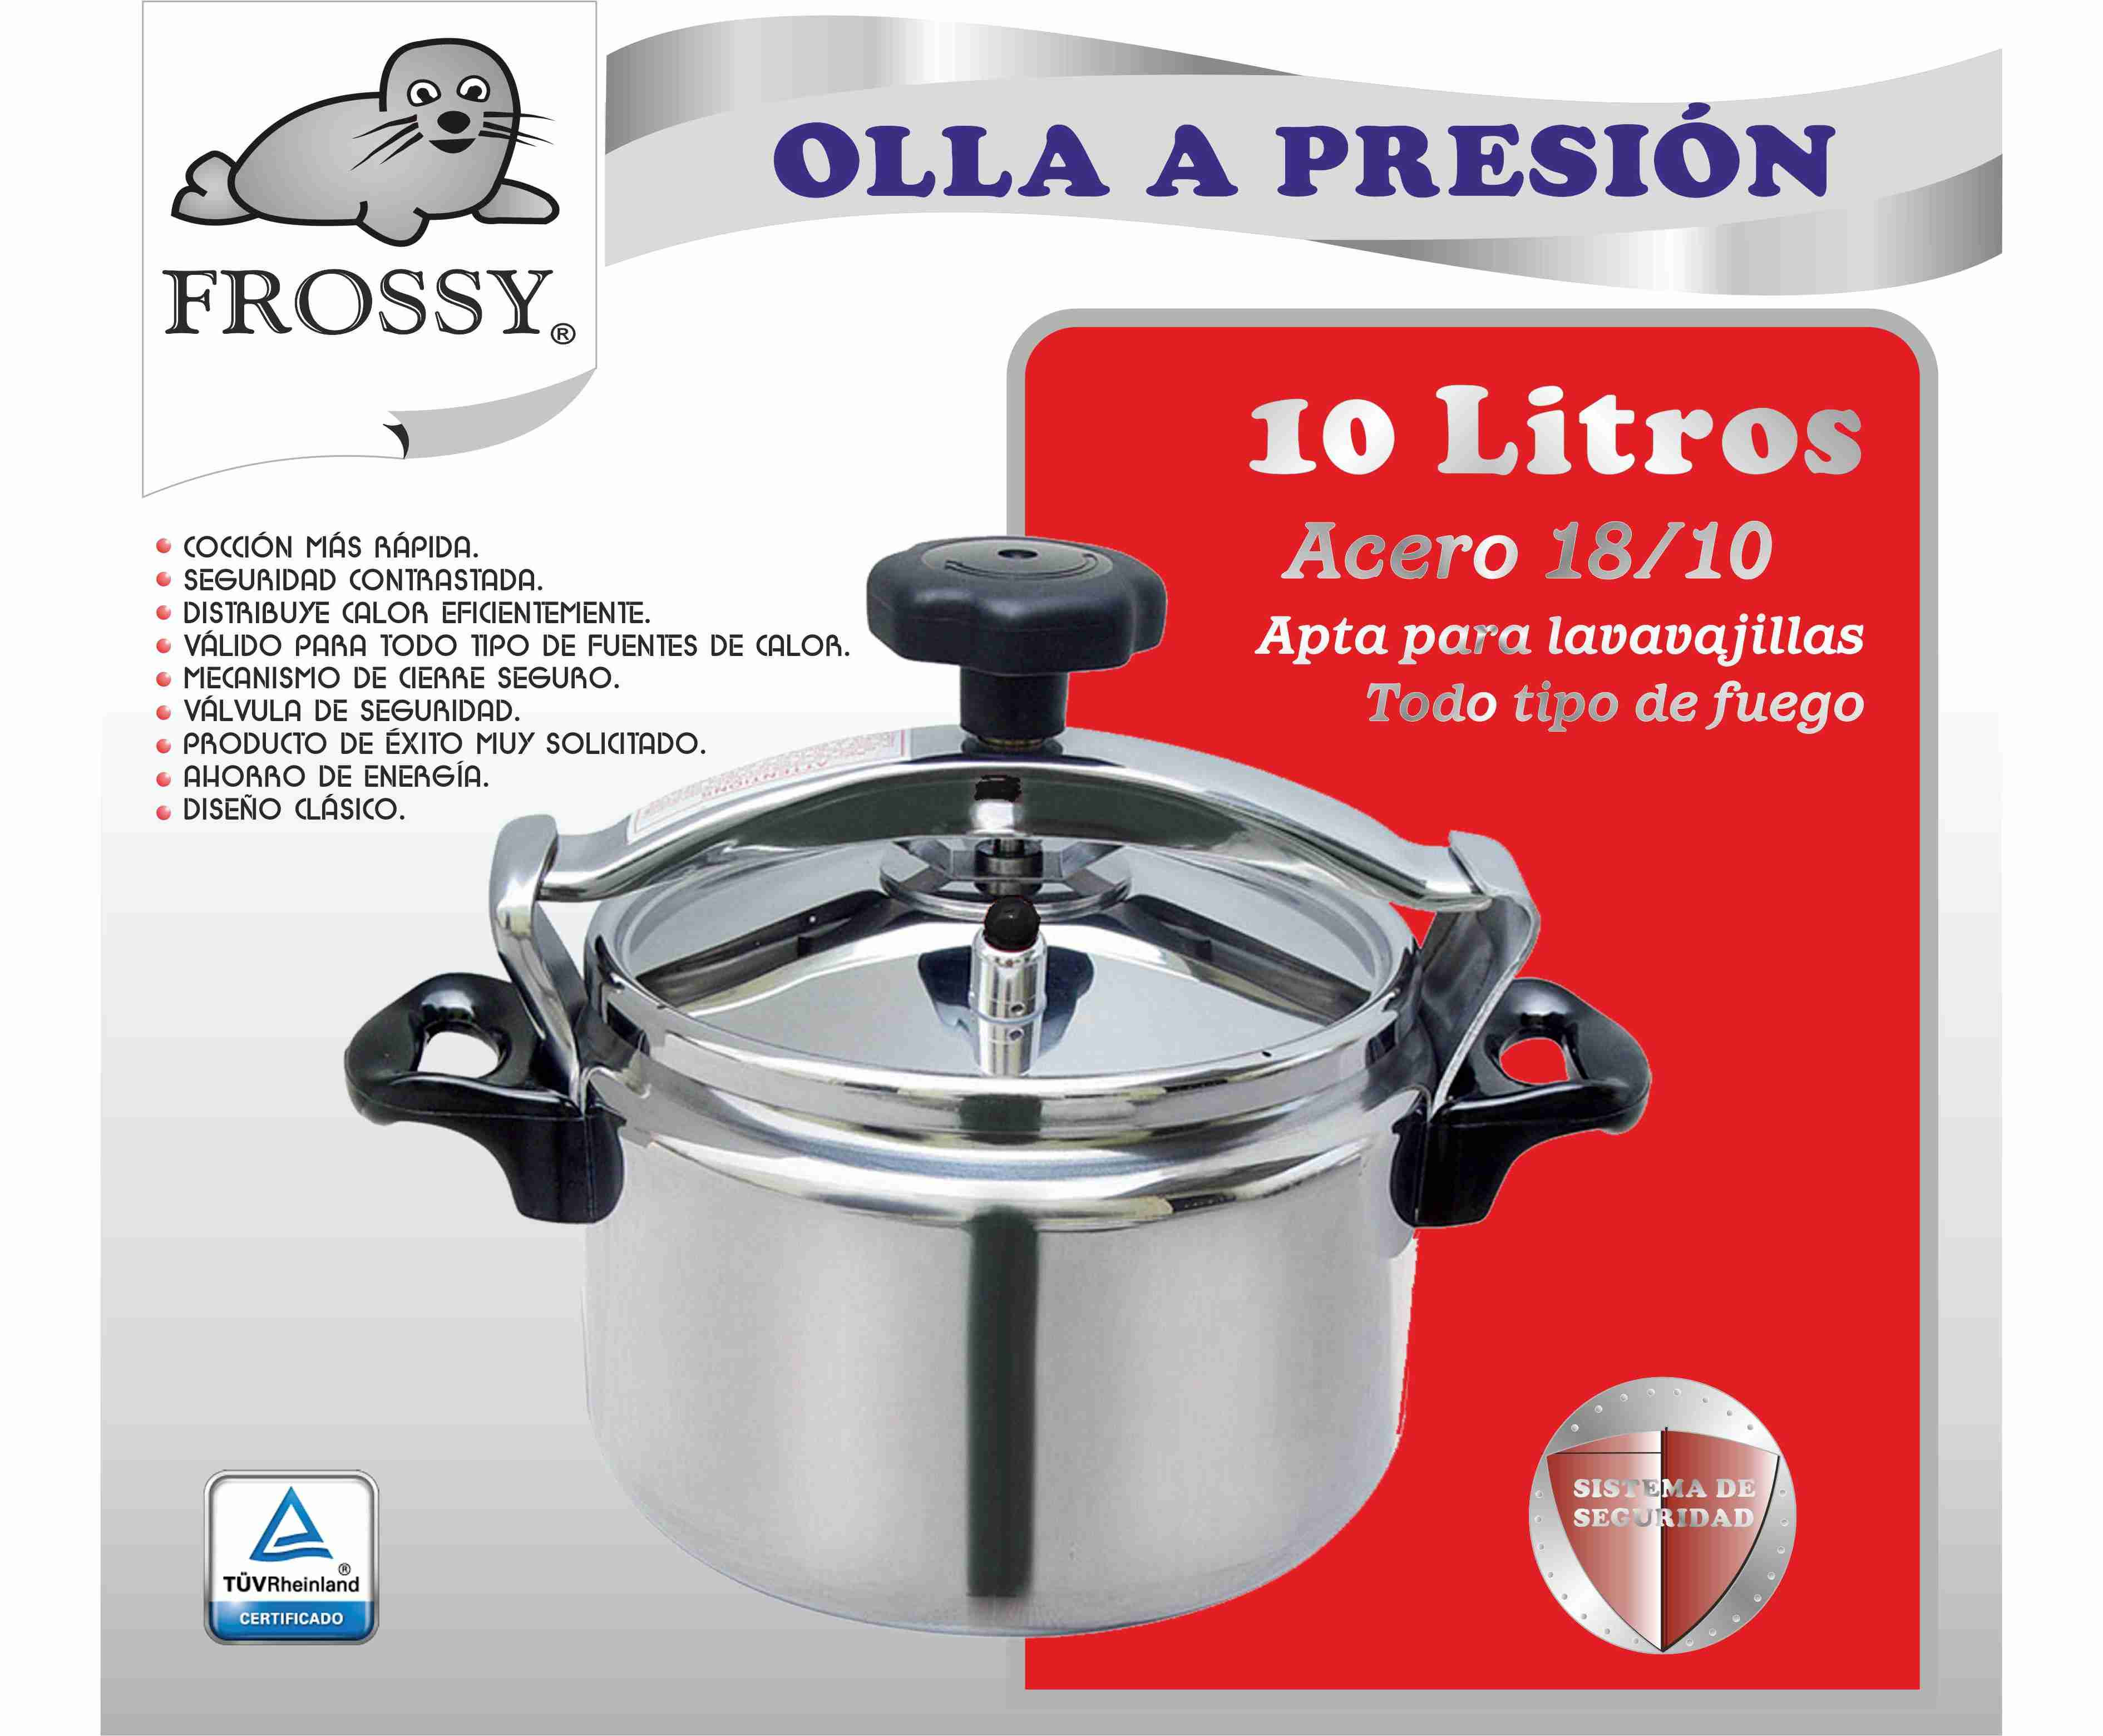 OLLA A PRESION FROSSY INOX 10 LITROS